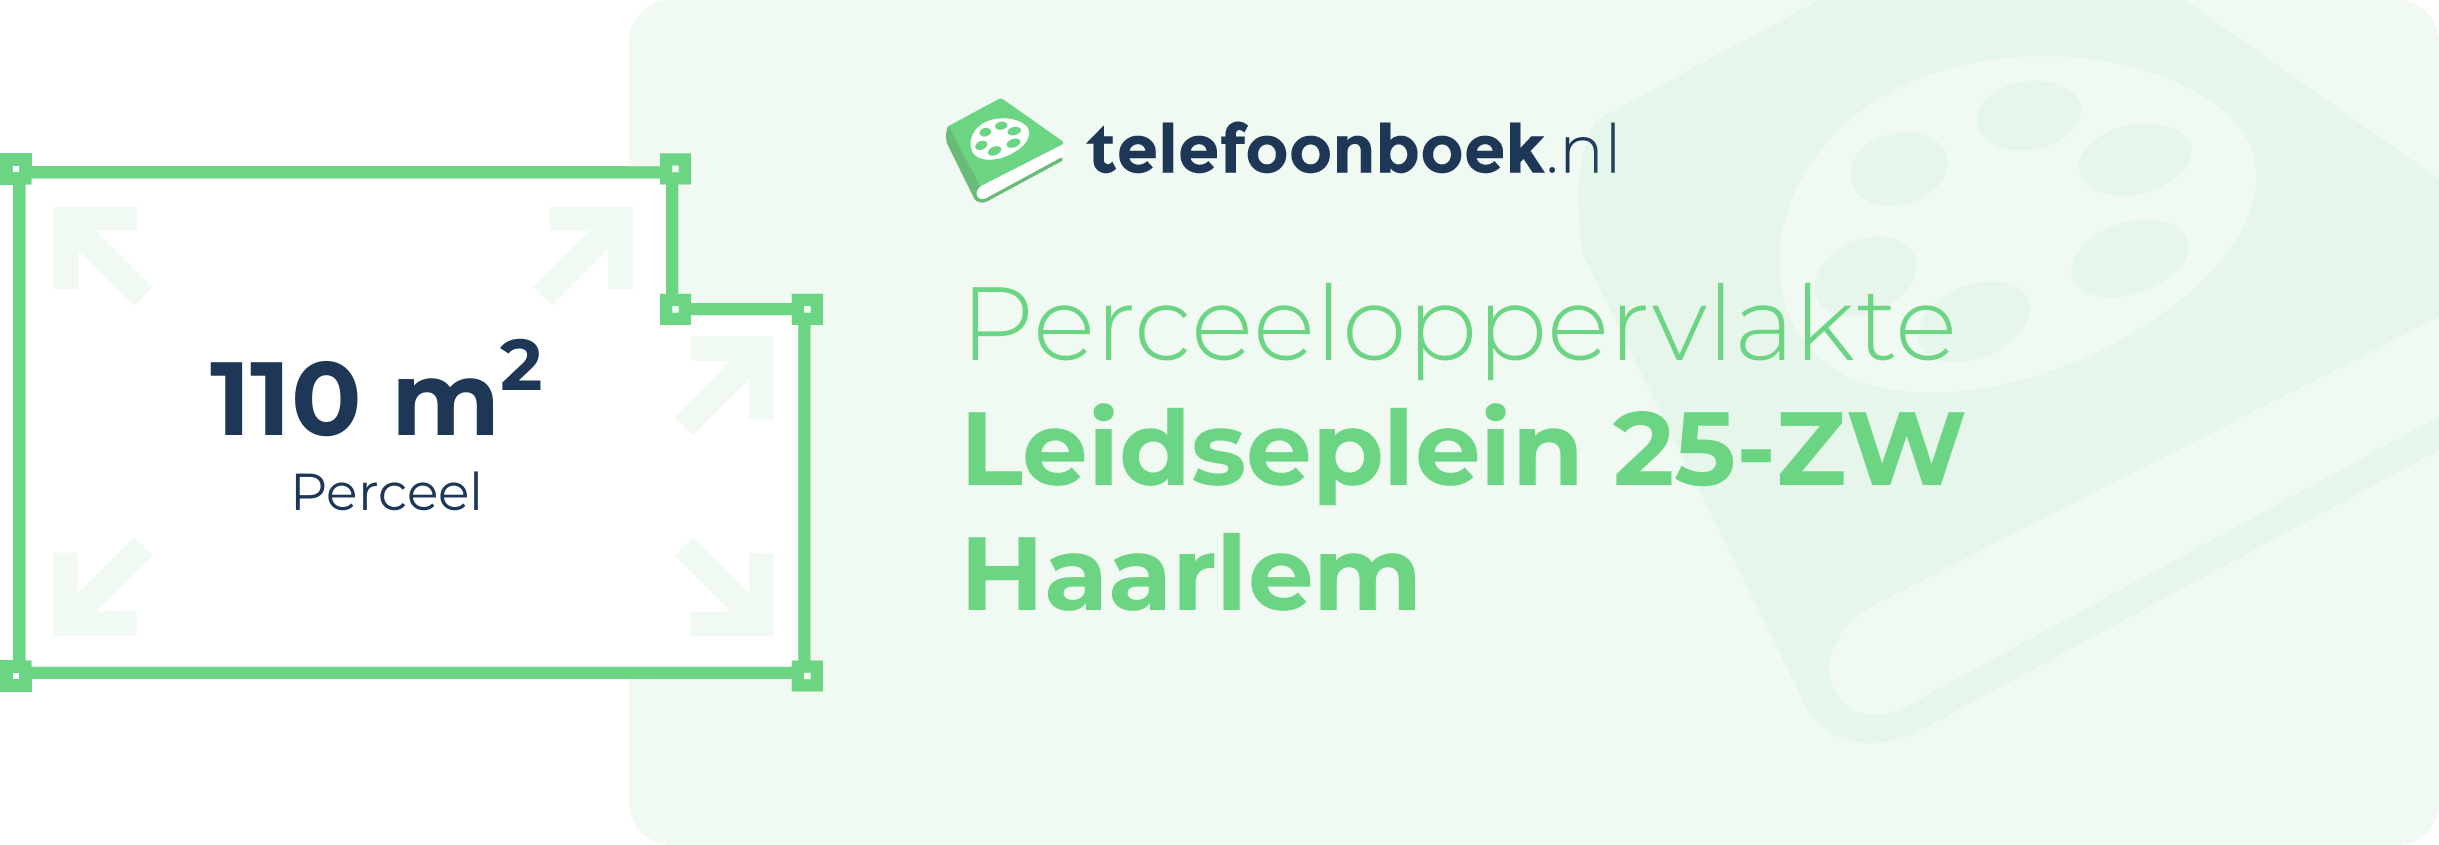 Perceeloppervlakte Leidseplein 25-ZW Haarlem